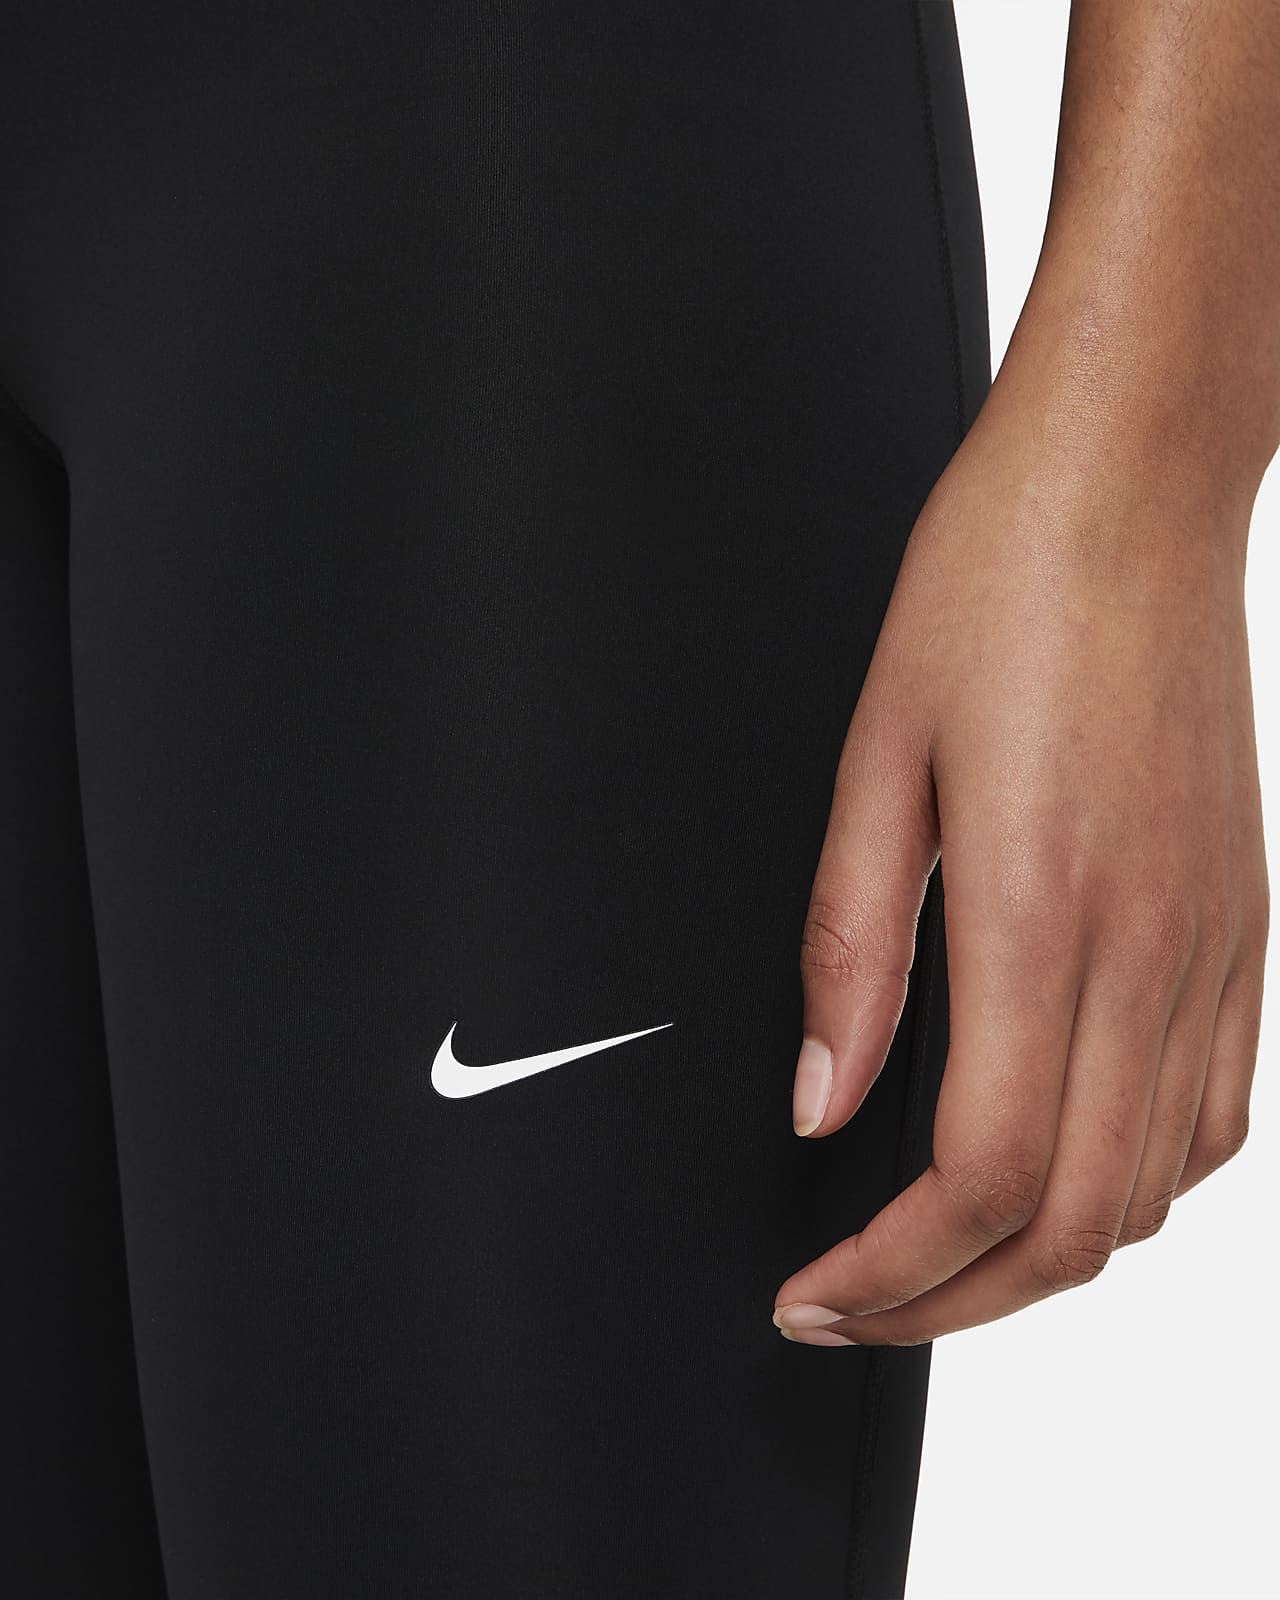  Nike Women's 365 Mid-Rise Leggings : Sports & Outdoors